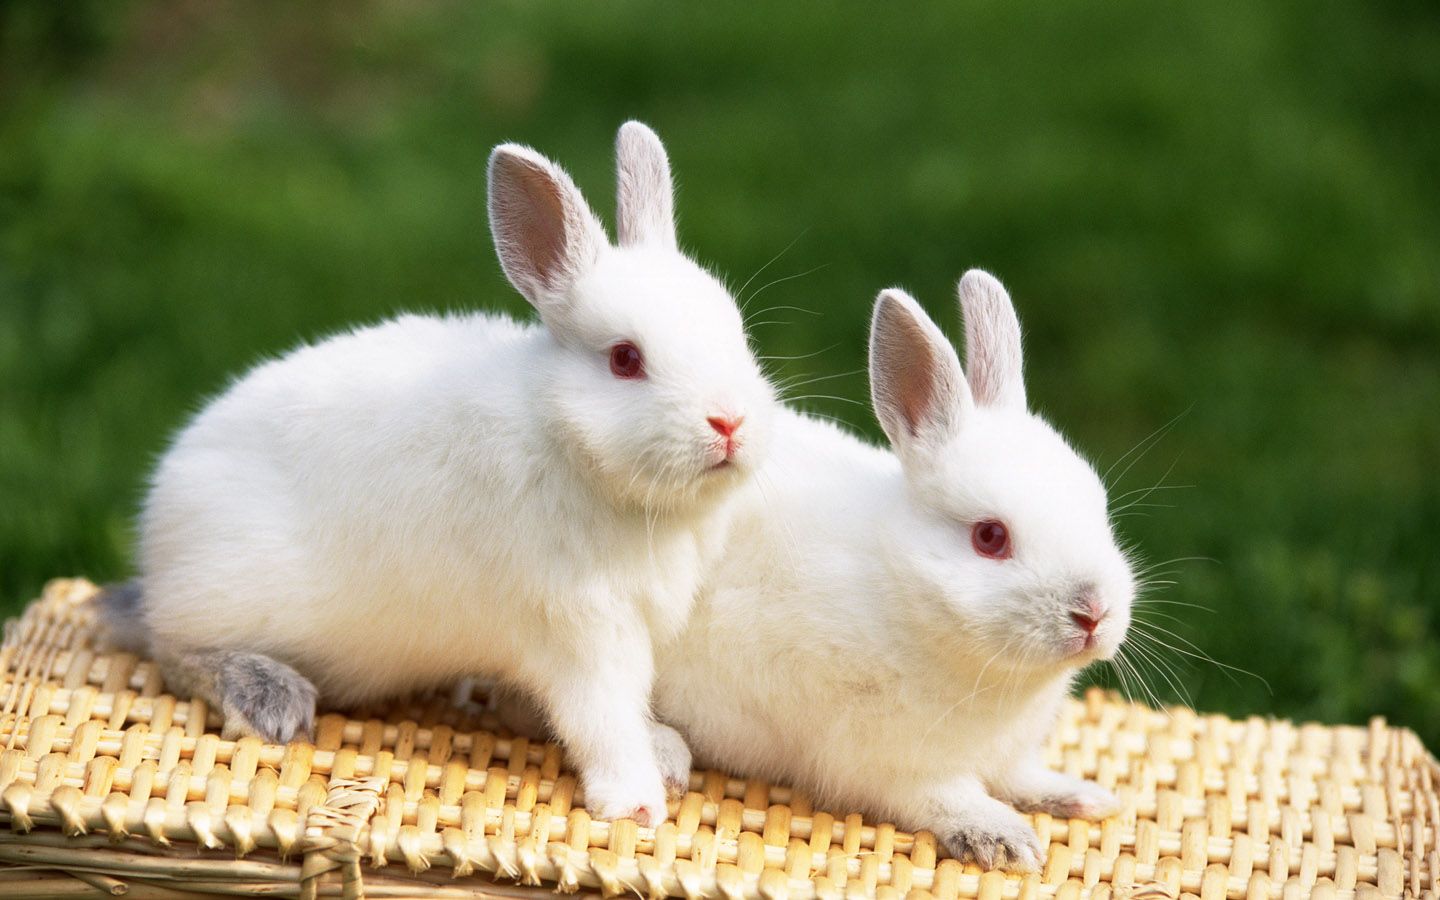 The cute Rabbits